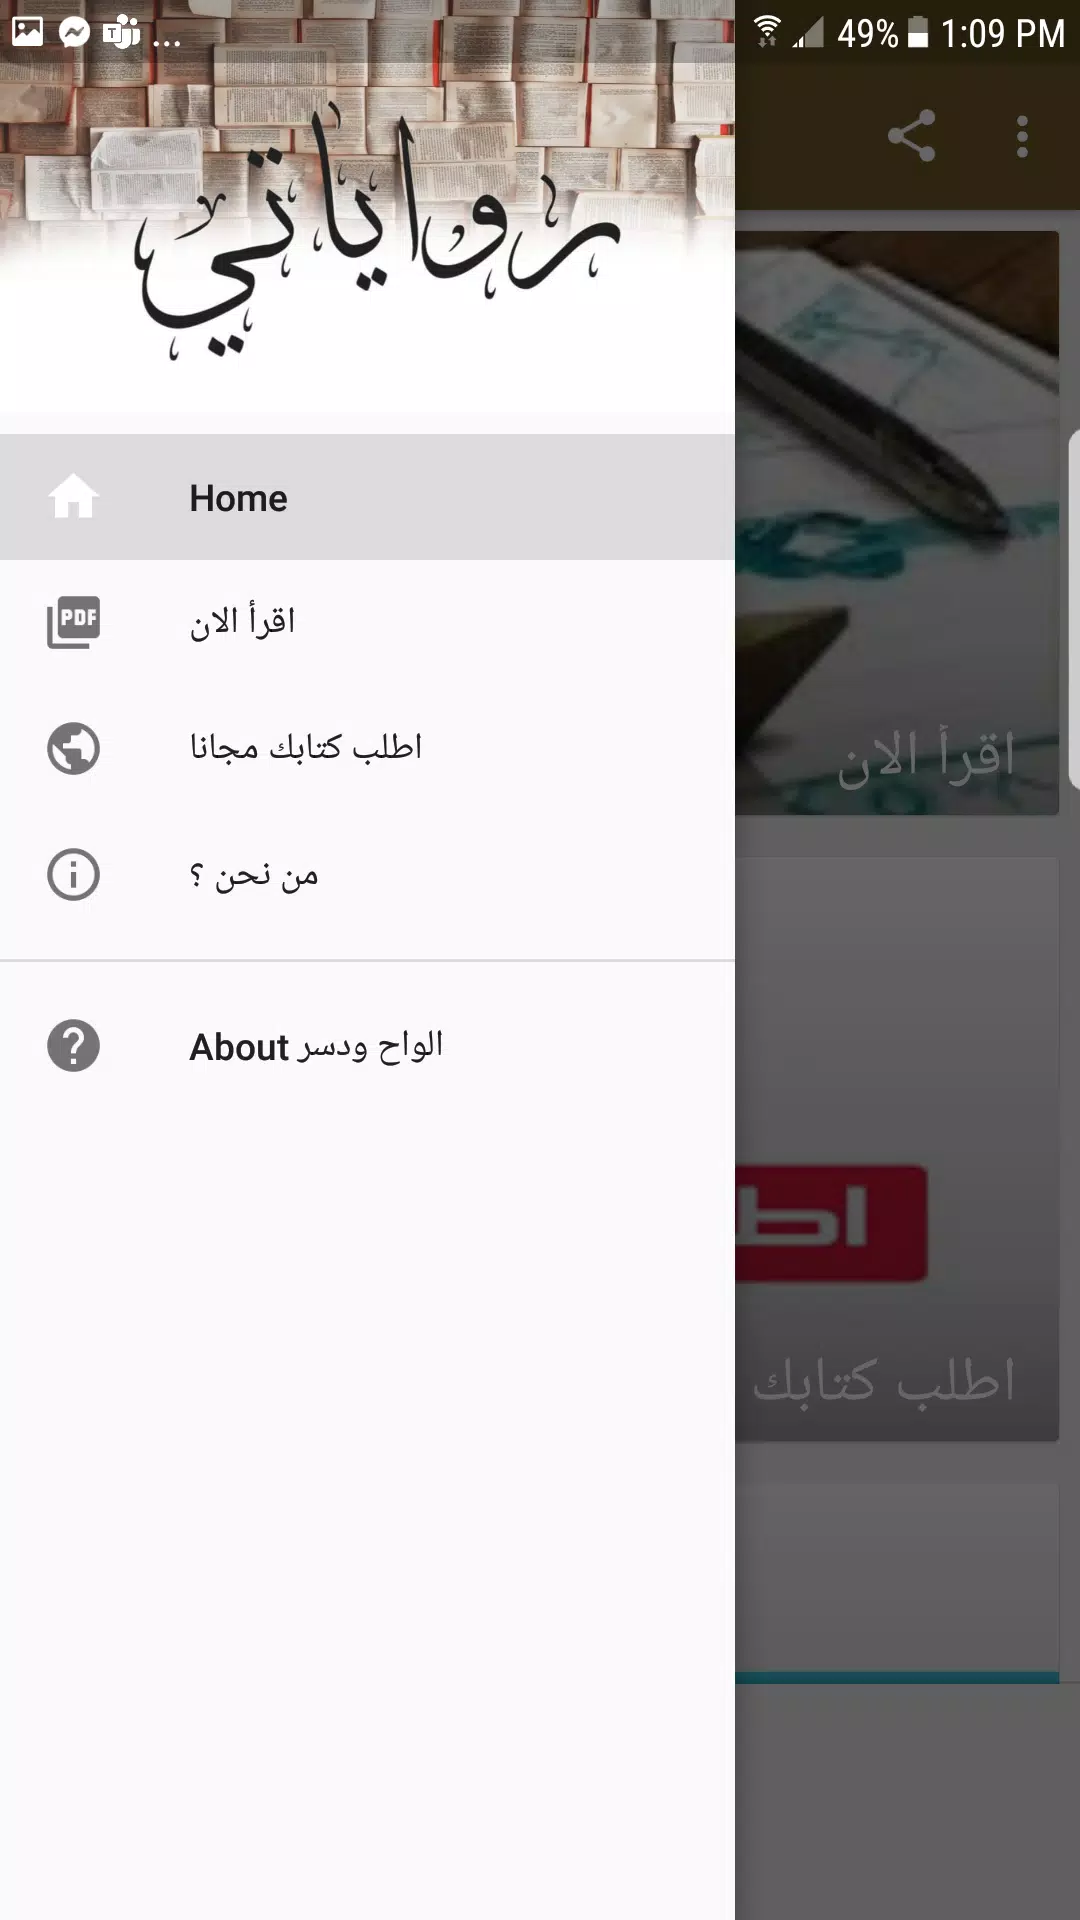 Descarga de APK de ألواح ودسر لأحمد خيري العمري para Android